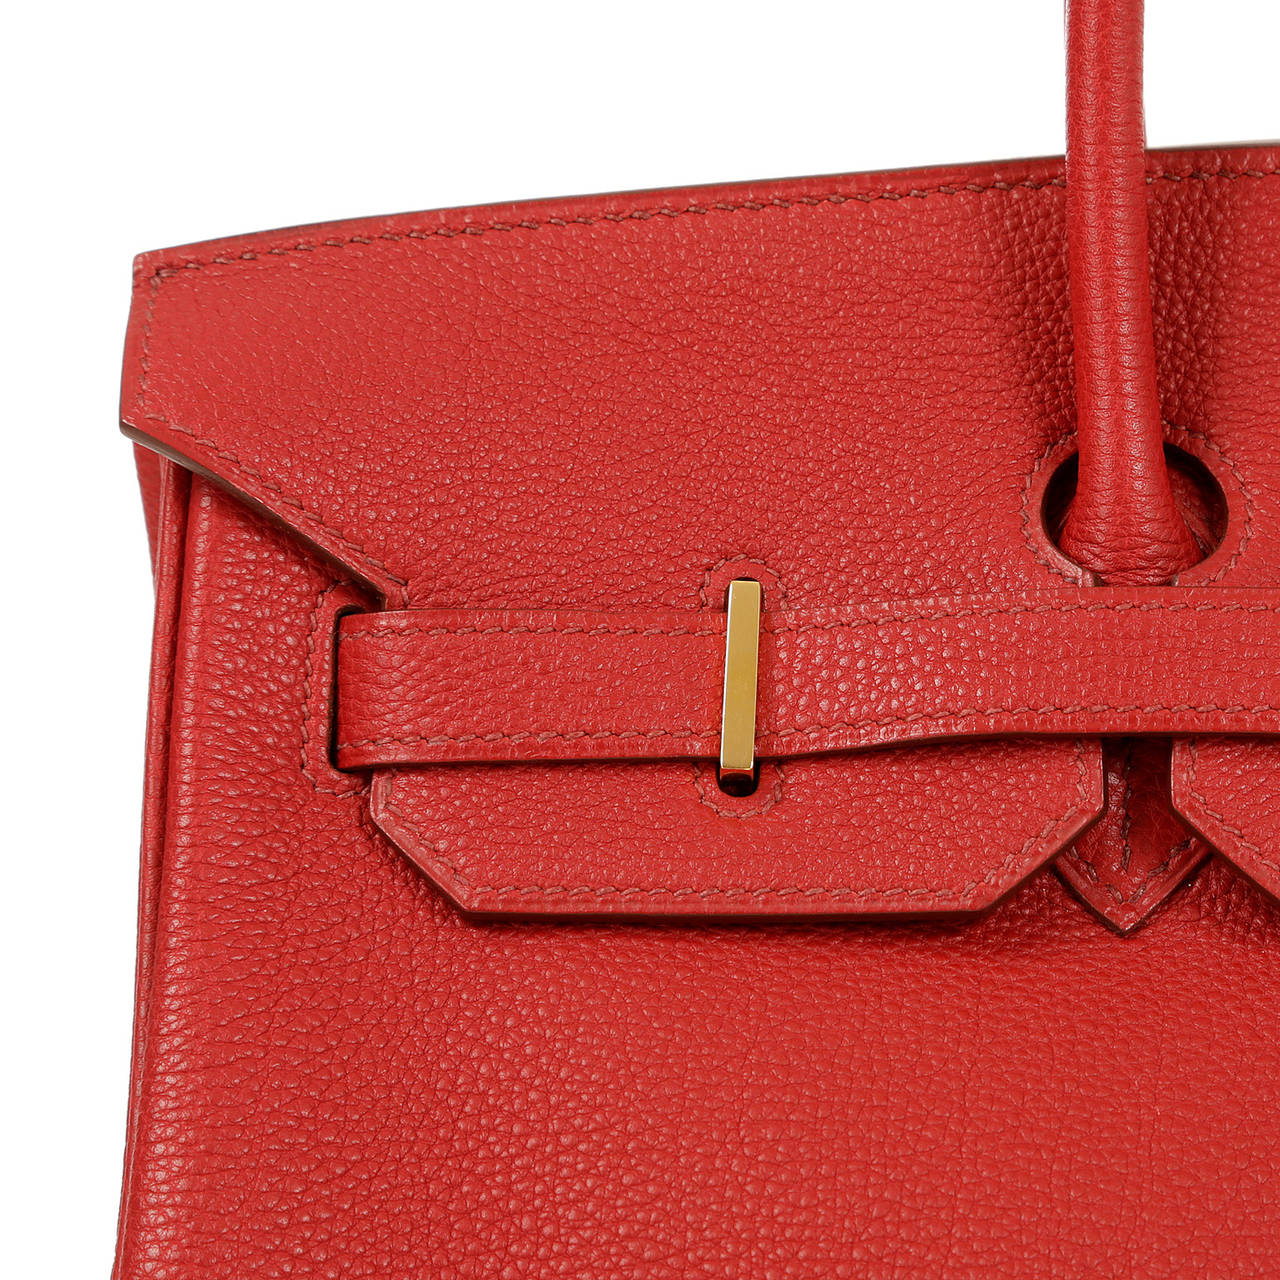 Hermes Red Leather 35 cm Birkin Bag-  RED TOGO with GOLD hardware 2